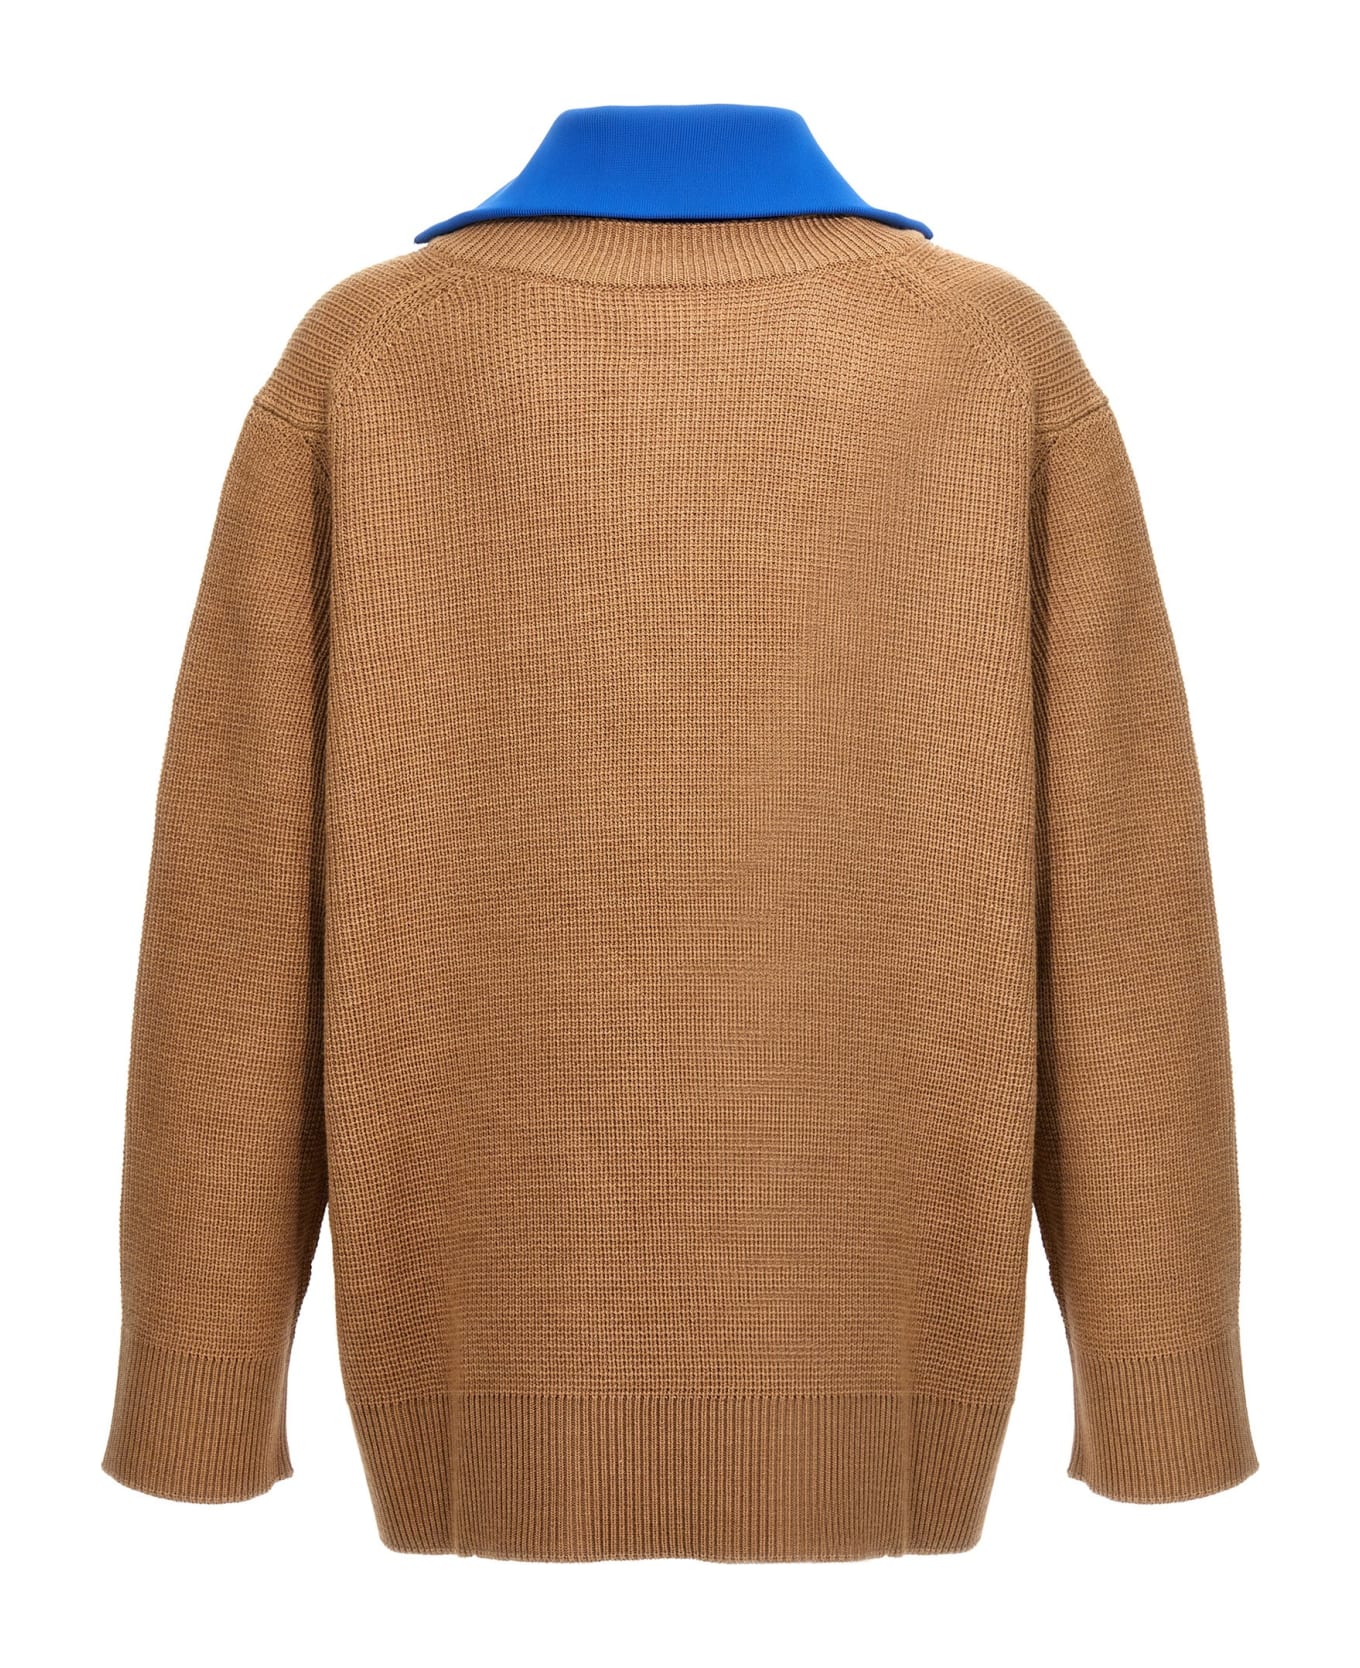 Jil Sander Half Zip Sweater - Multicolor